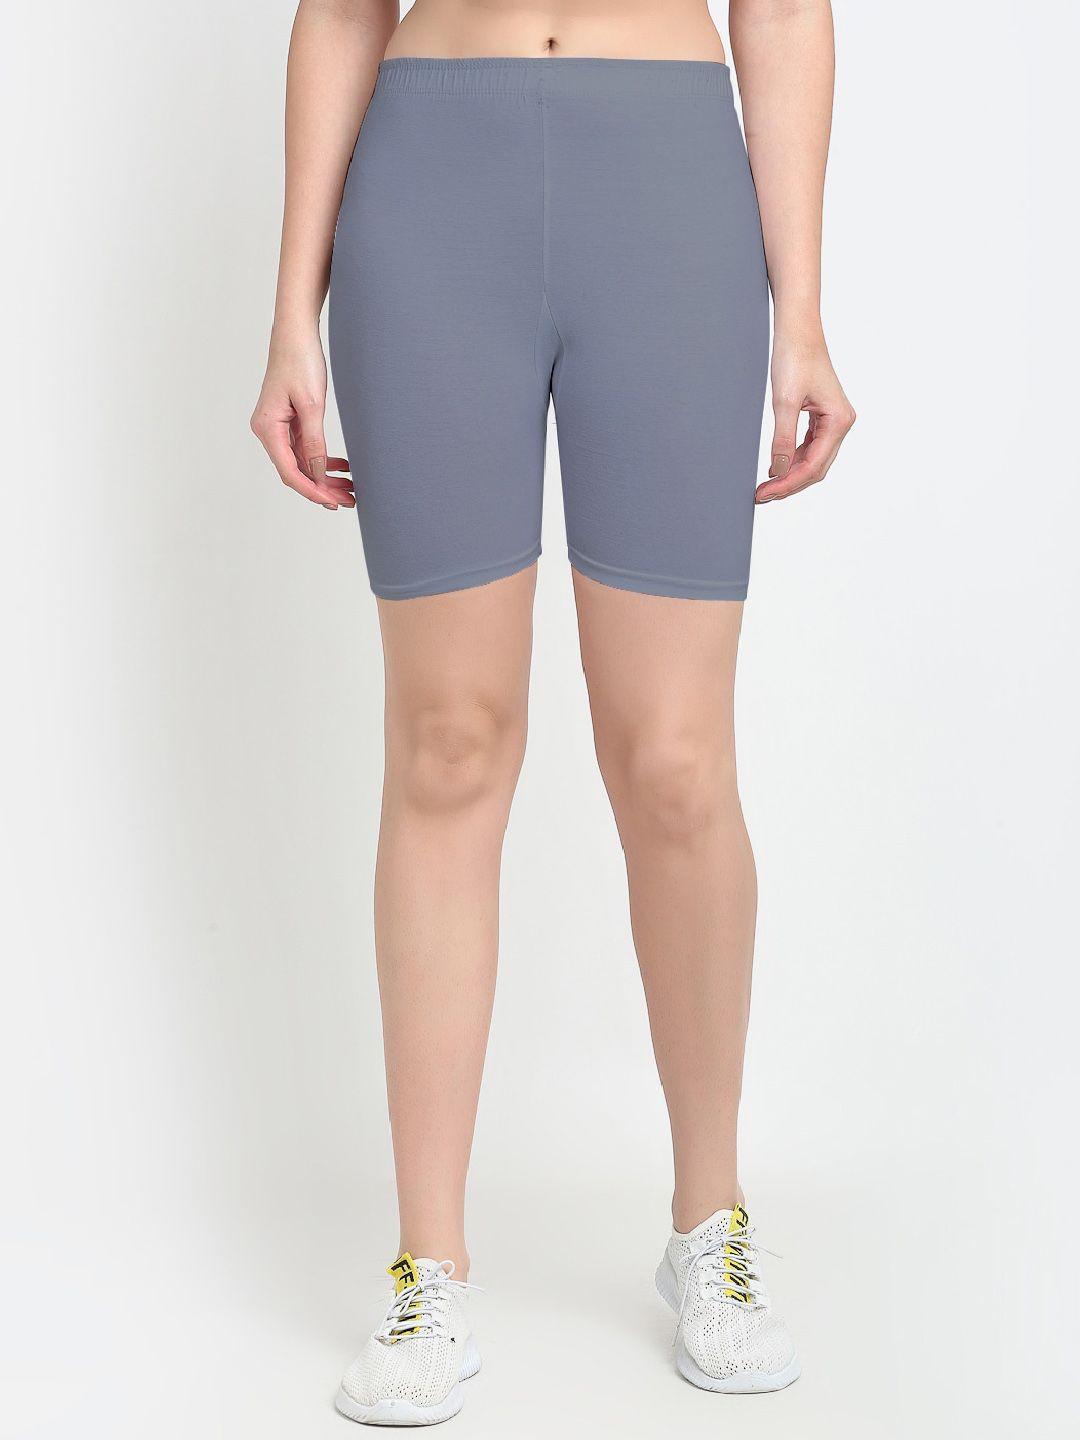 GRACIT Women Grey Biker Shorts